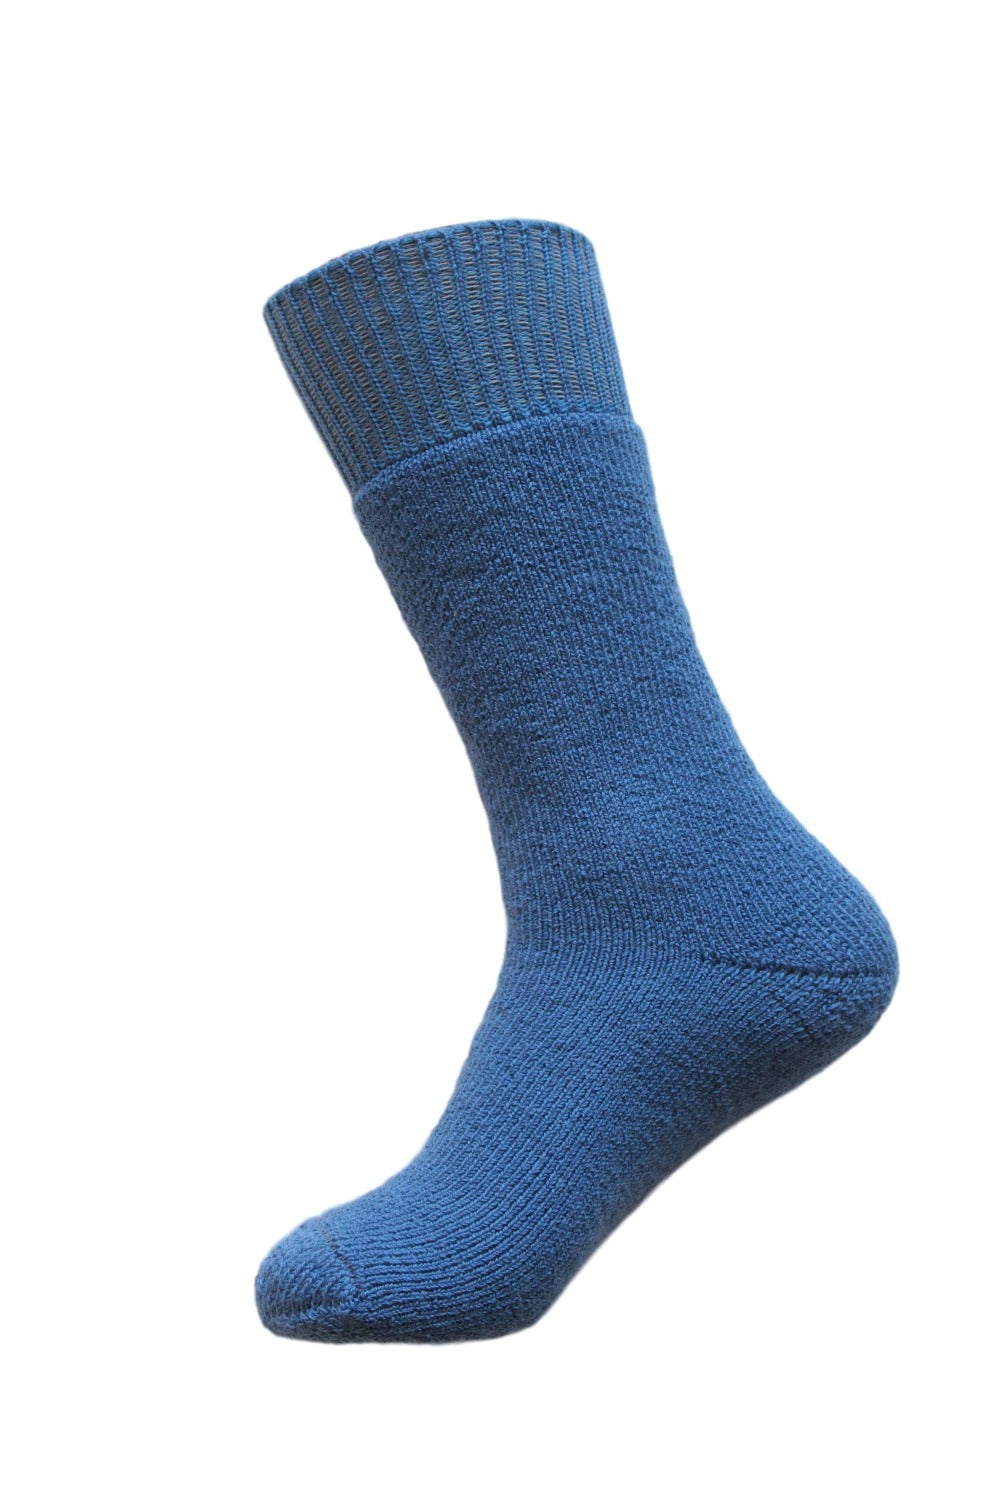 Merino sock- Roslyn Blue LOOSE TOP